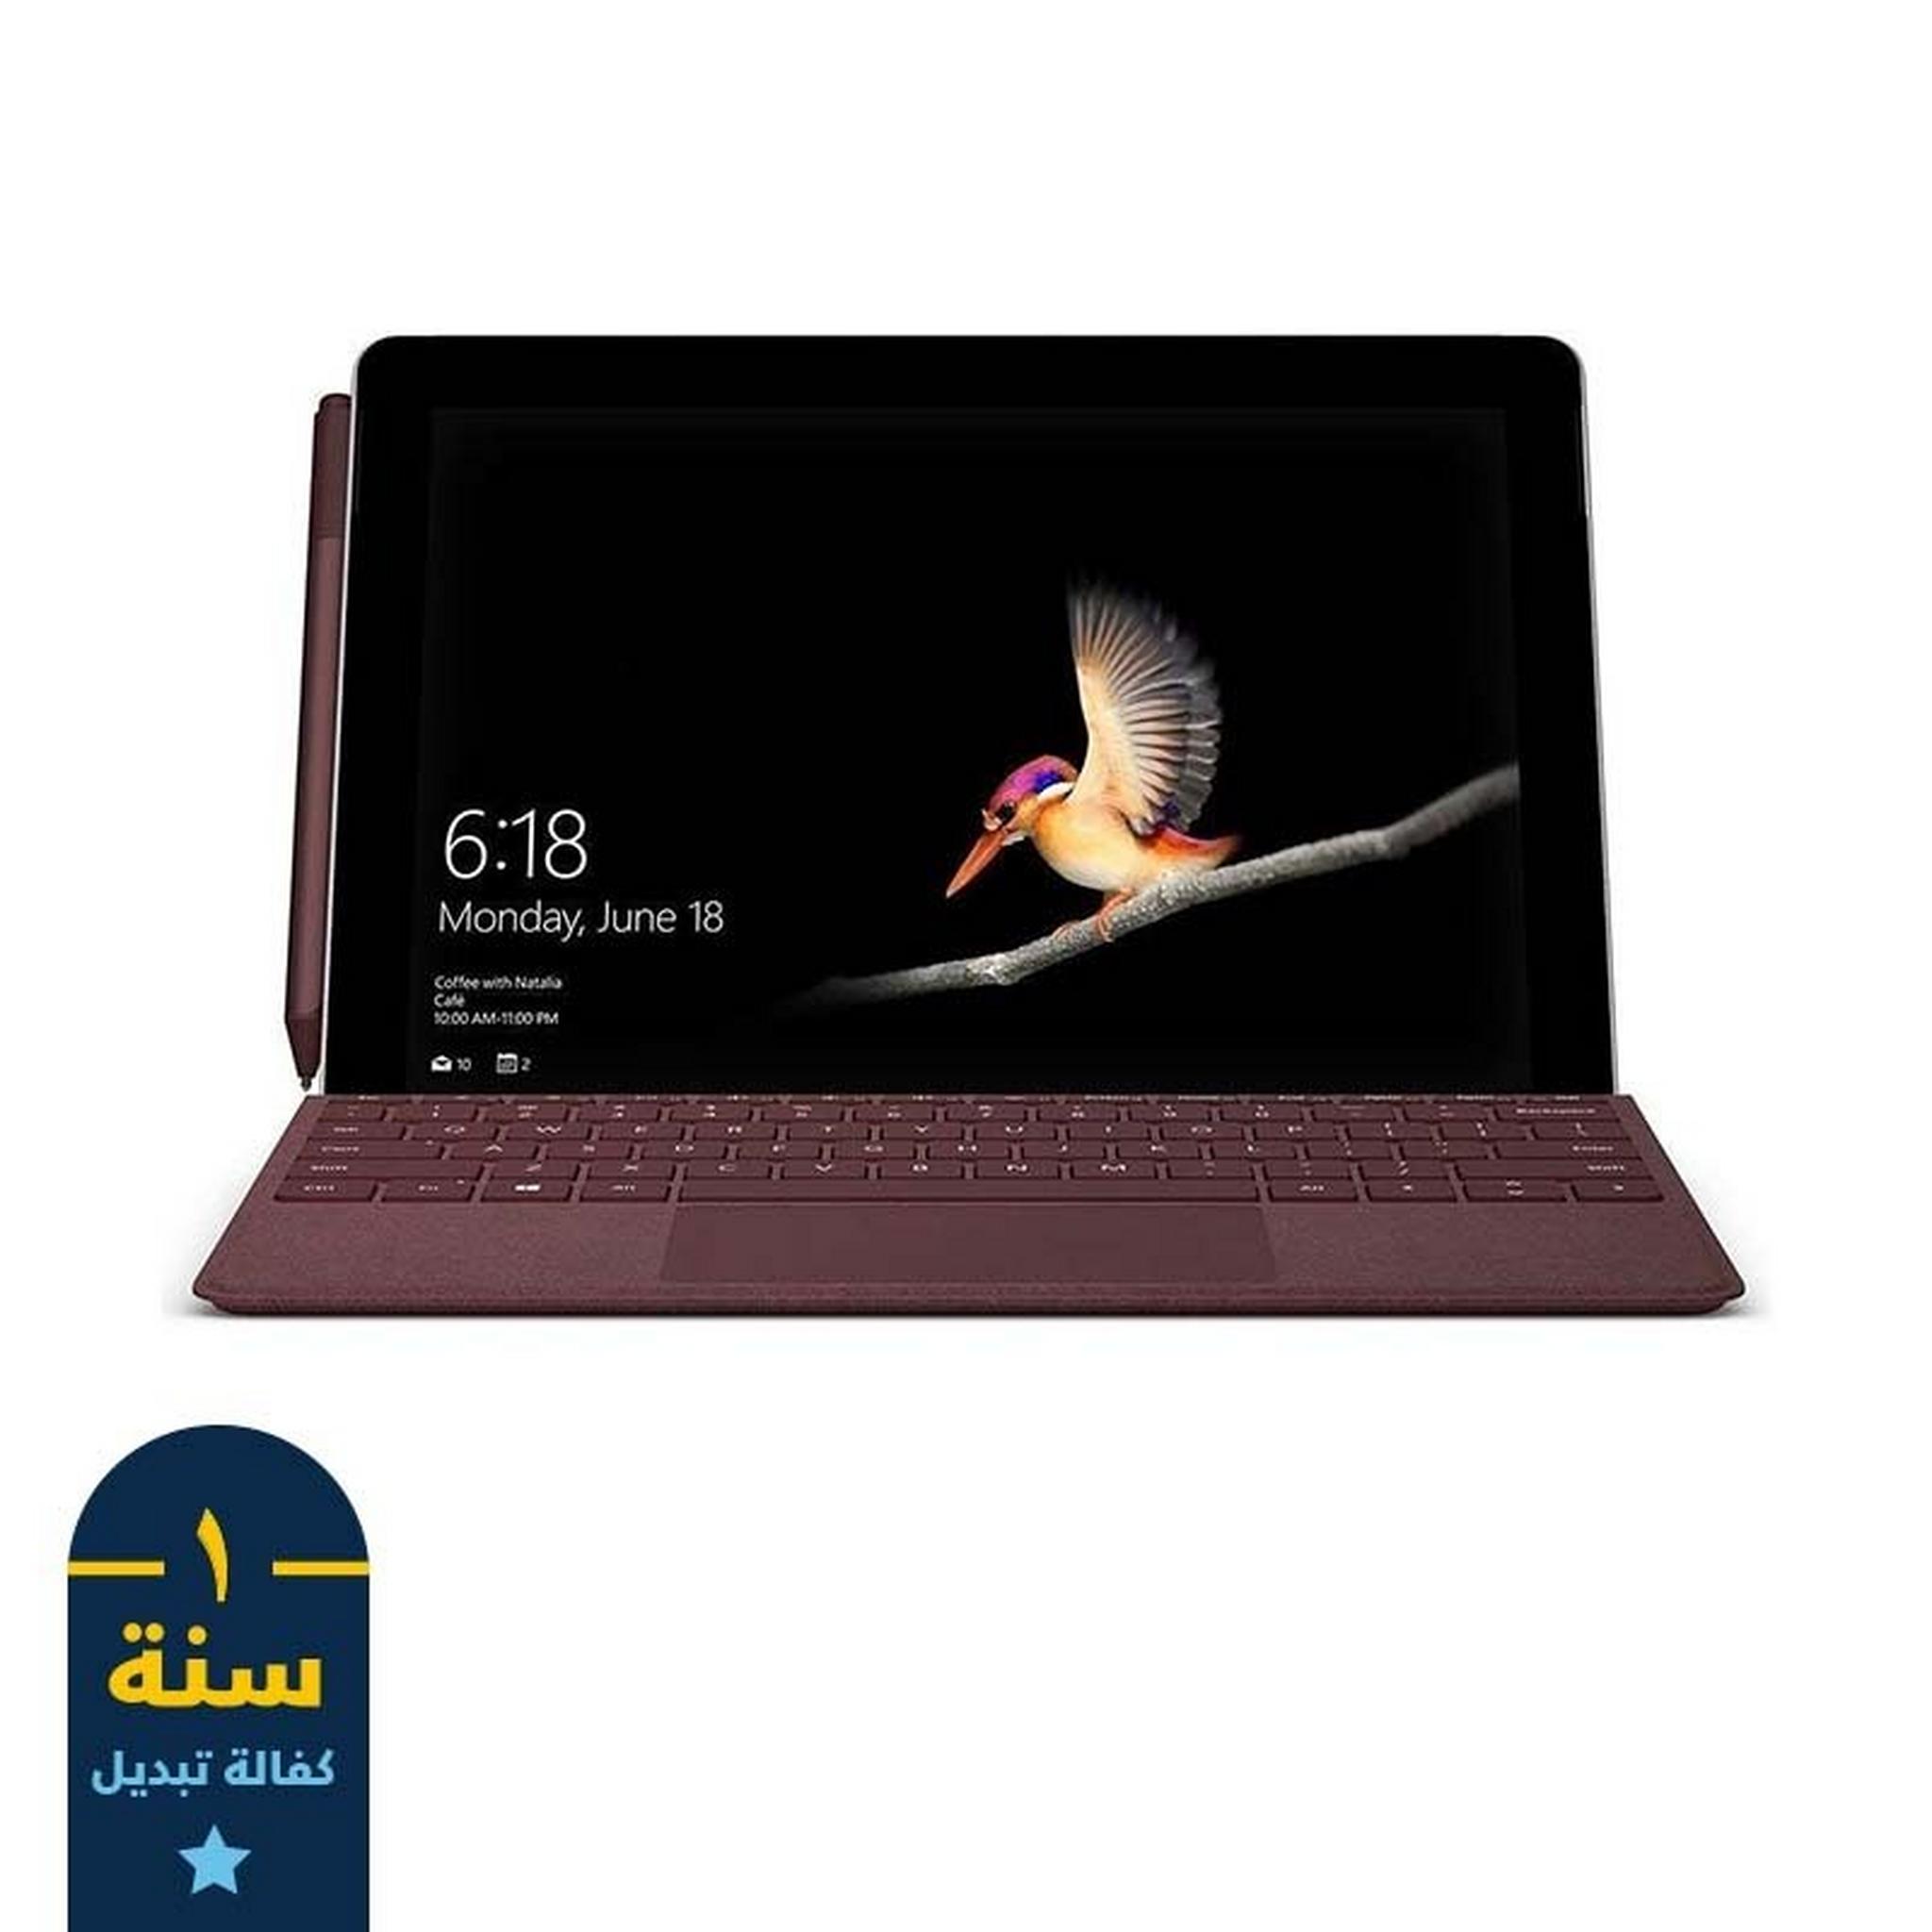 Microsoft Surface Go Intel Pentium 4415Y 8GB RAM 128GB SSD Touchscreen Convertible Laptop - Silver